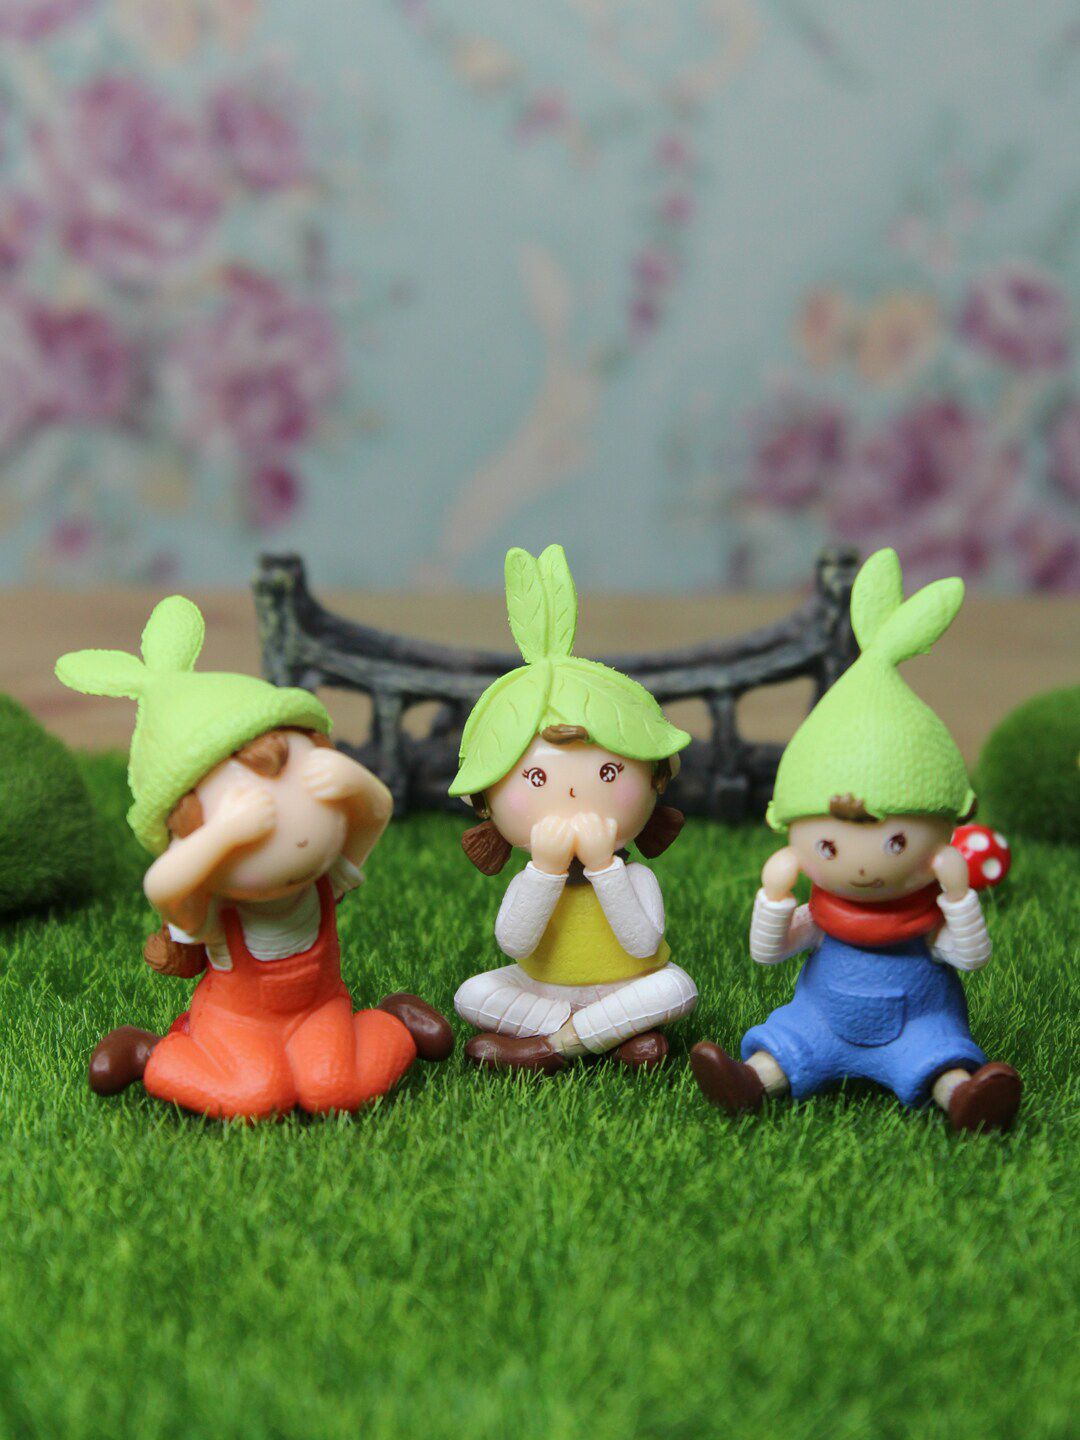 Wonderland Set Of 3 Green Cap Kids Miniature Toys Garden Accessory Price in India